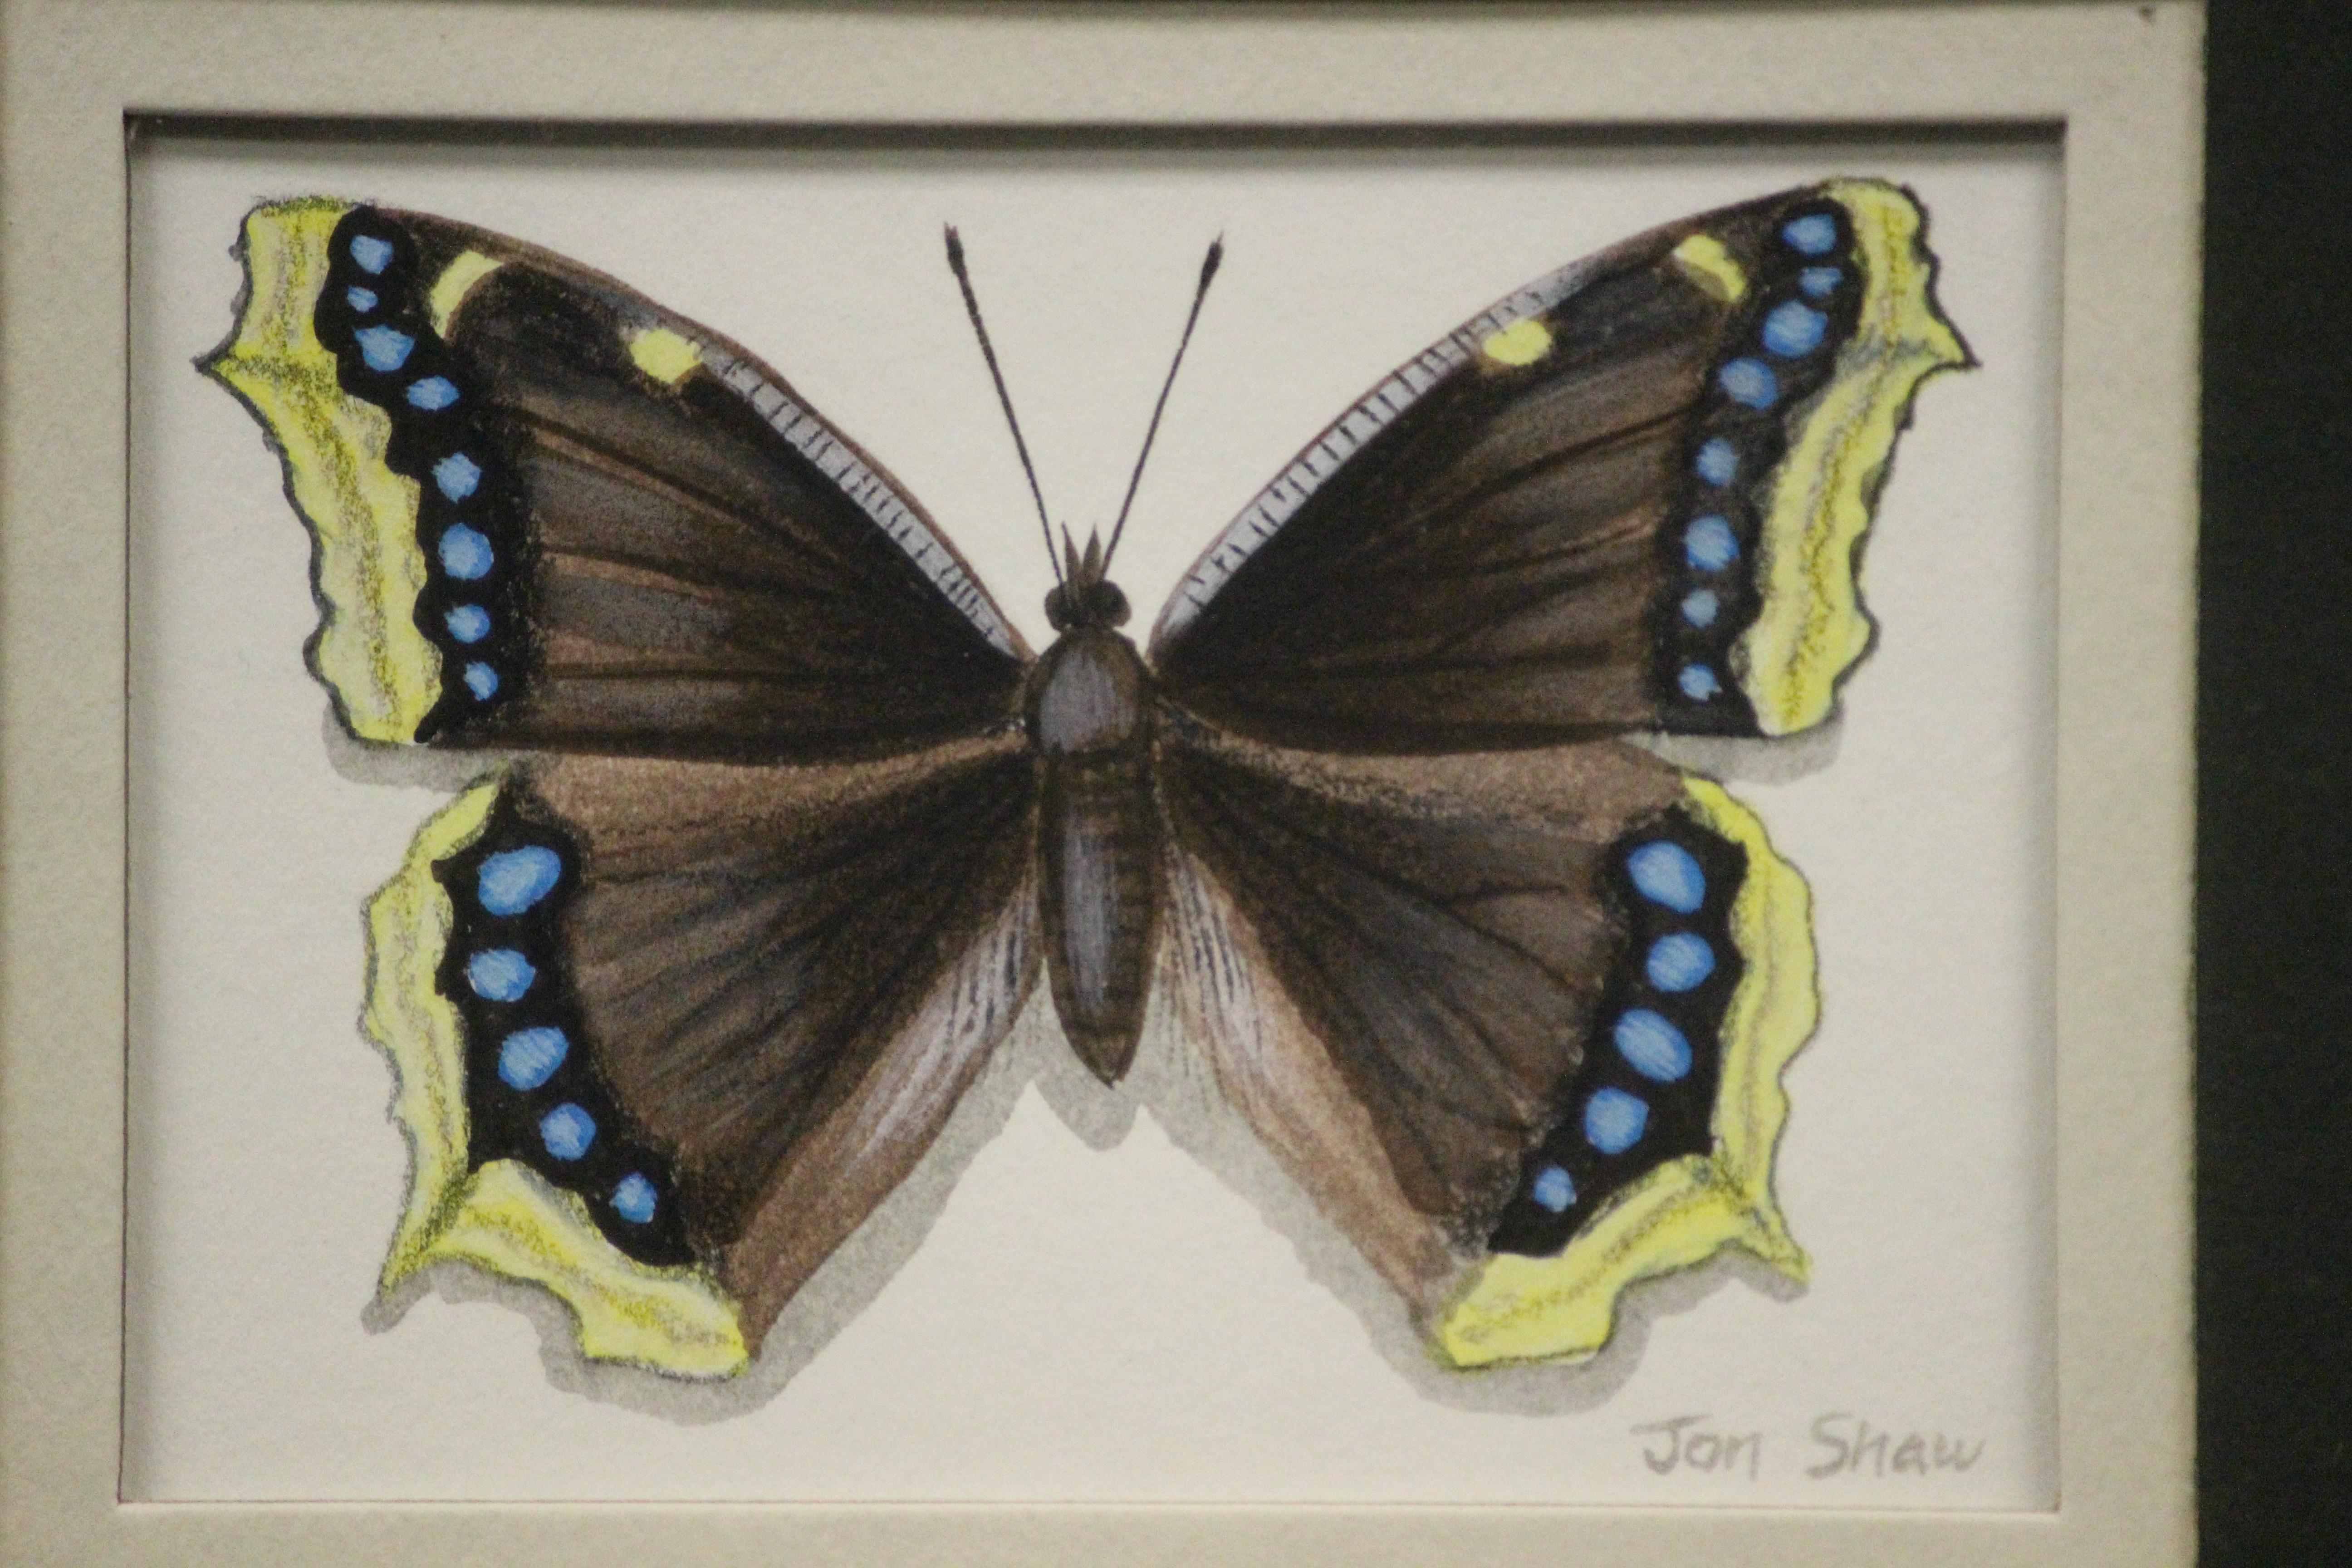 Delightful watercolour depicting four butterflies each pencil signed: Jon(athan) Shaw (LR)

Art Sz: 6